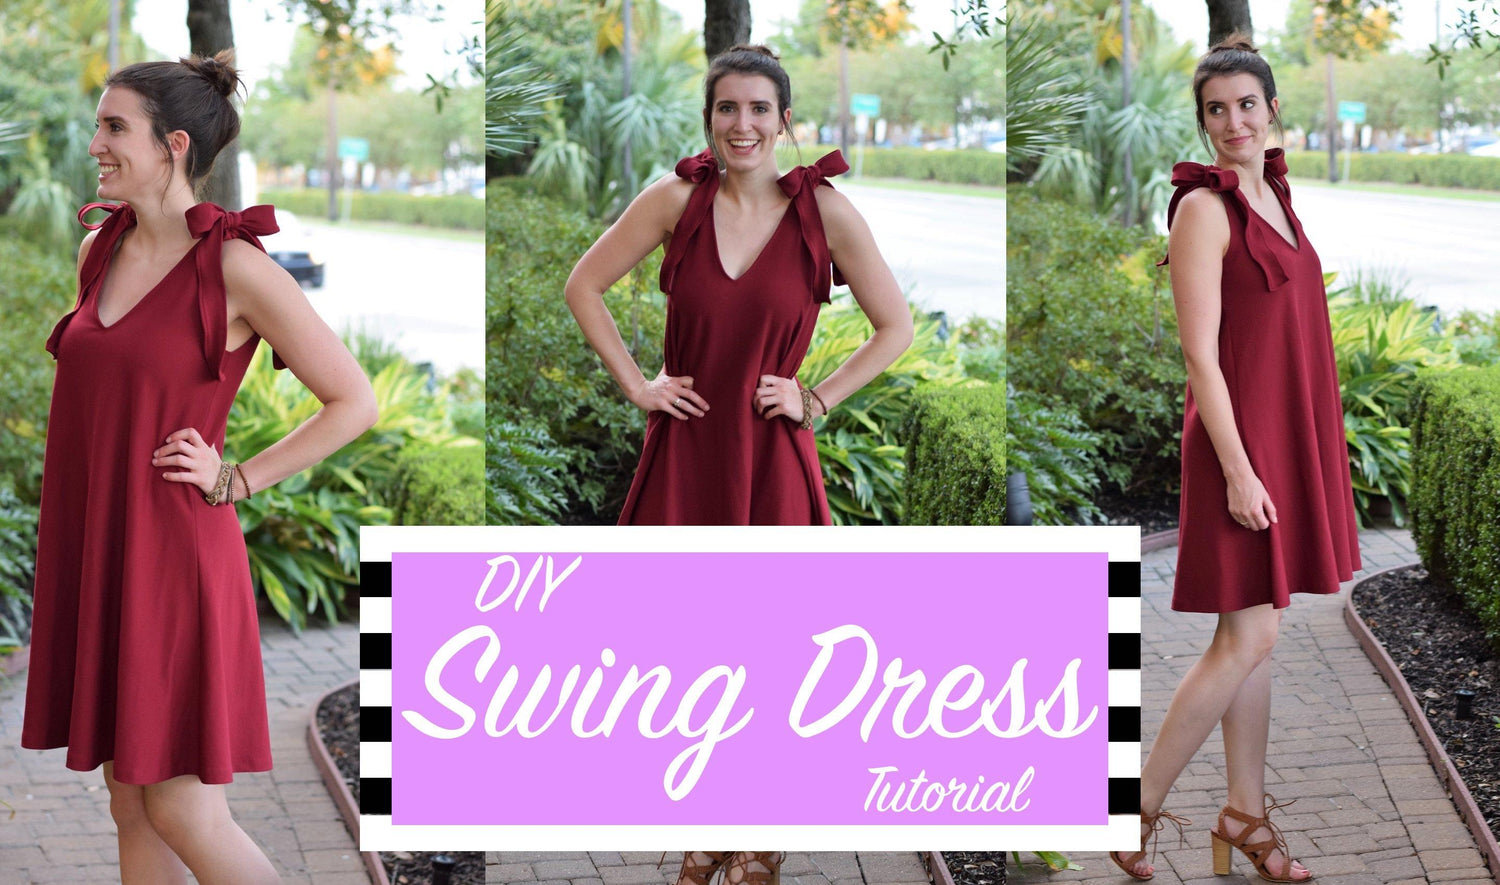 DIY Swing Dress with Bow Ties Tutorial